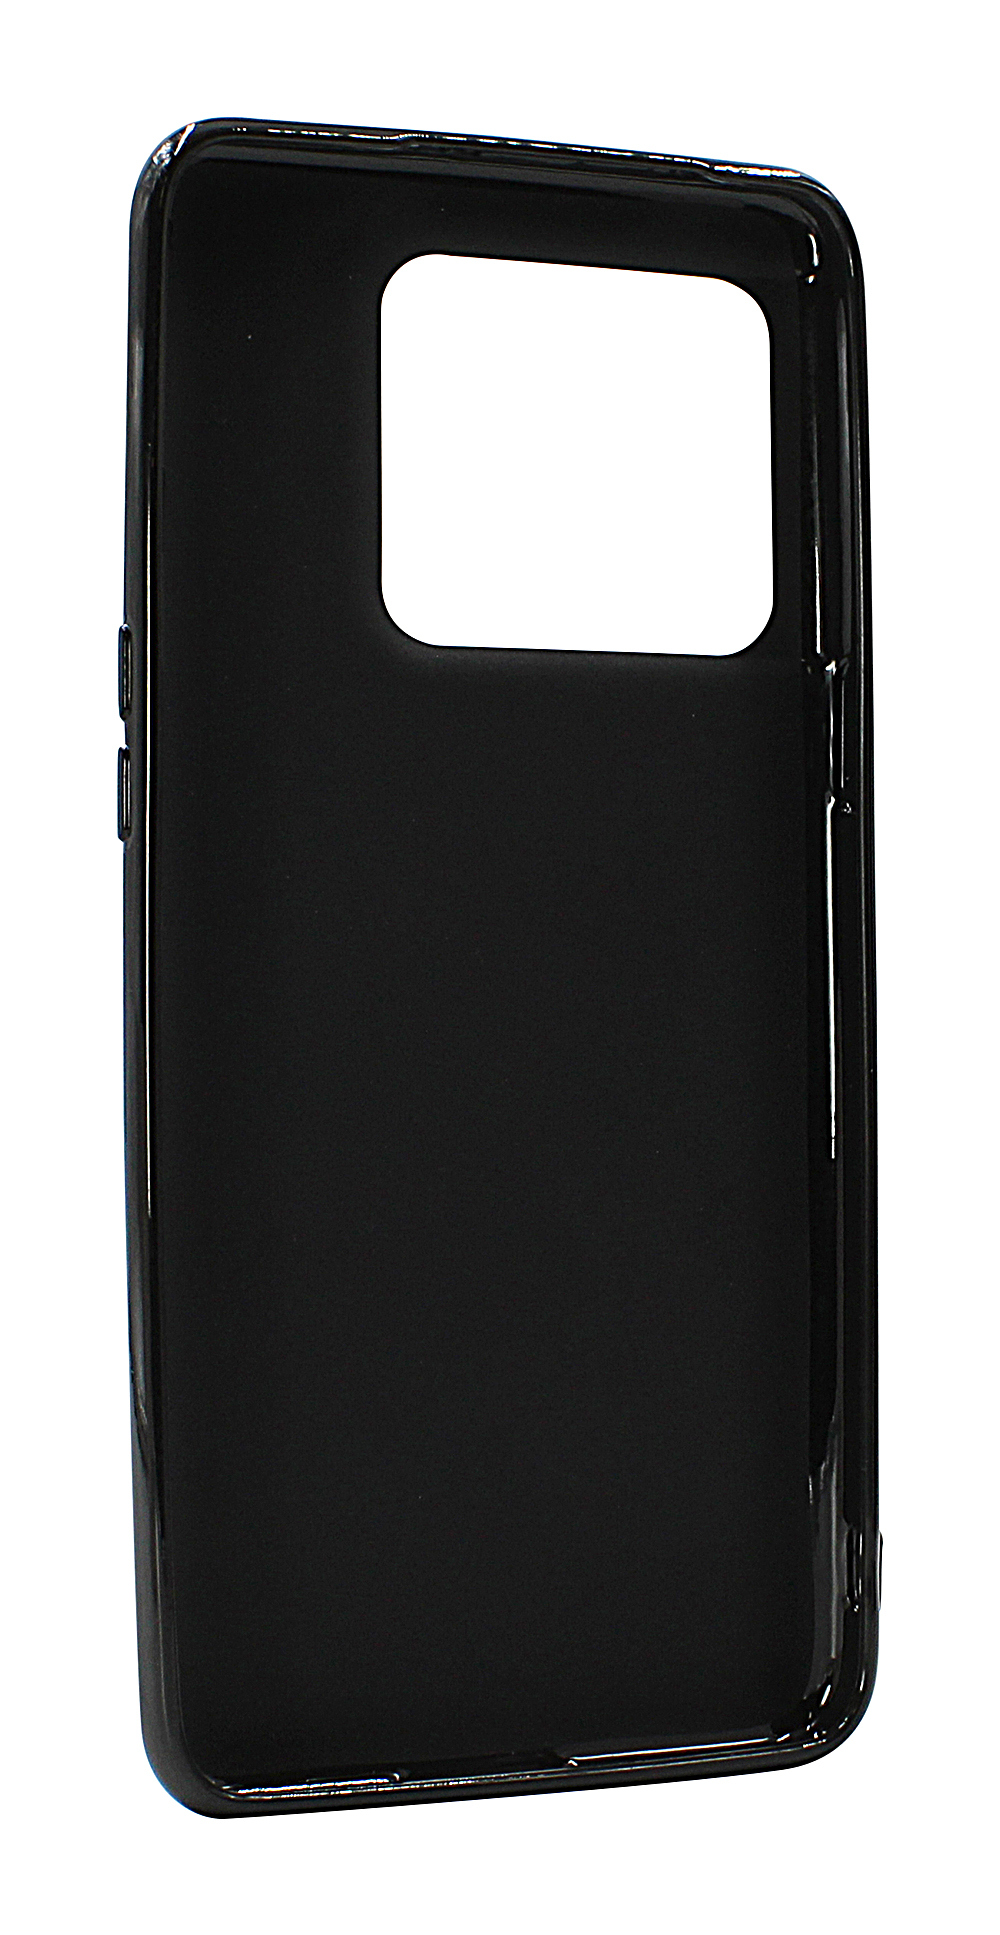 CoverInSkimblocker XL Magnet Fodral OnePlus 10T 5G